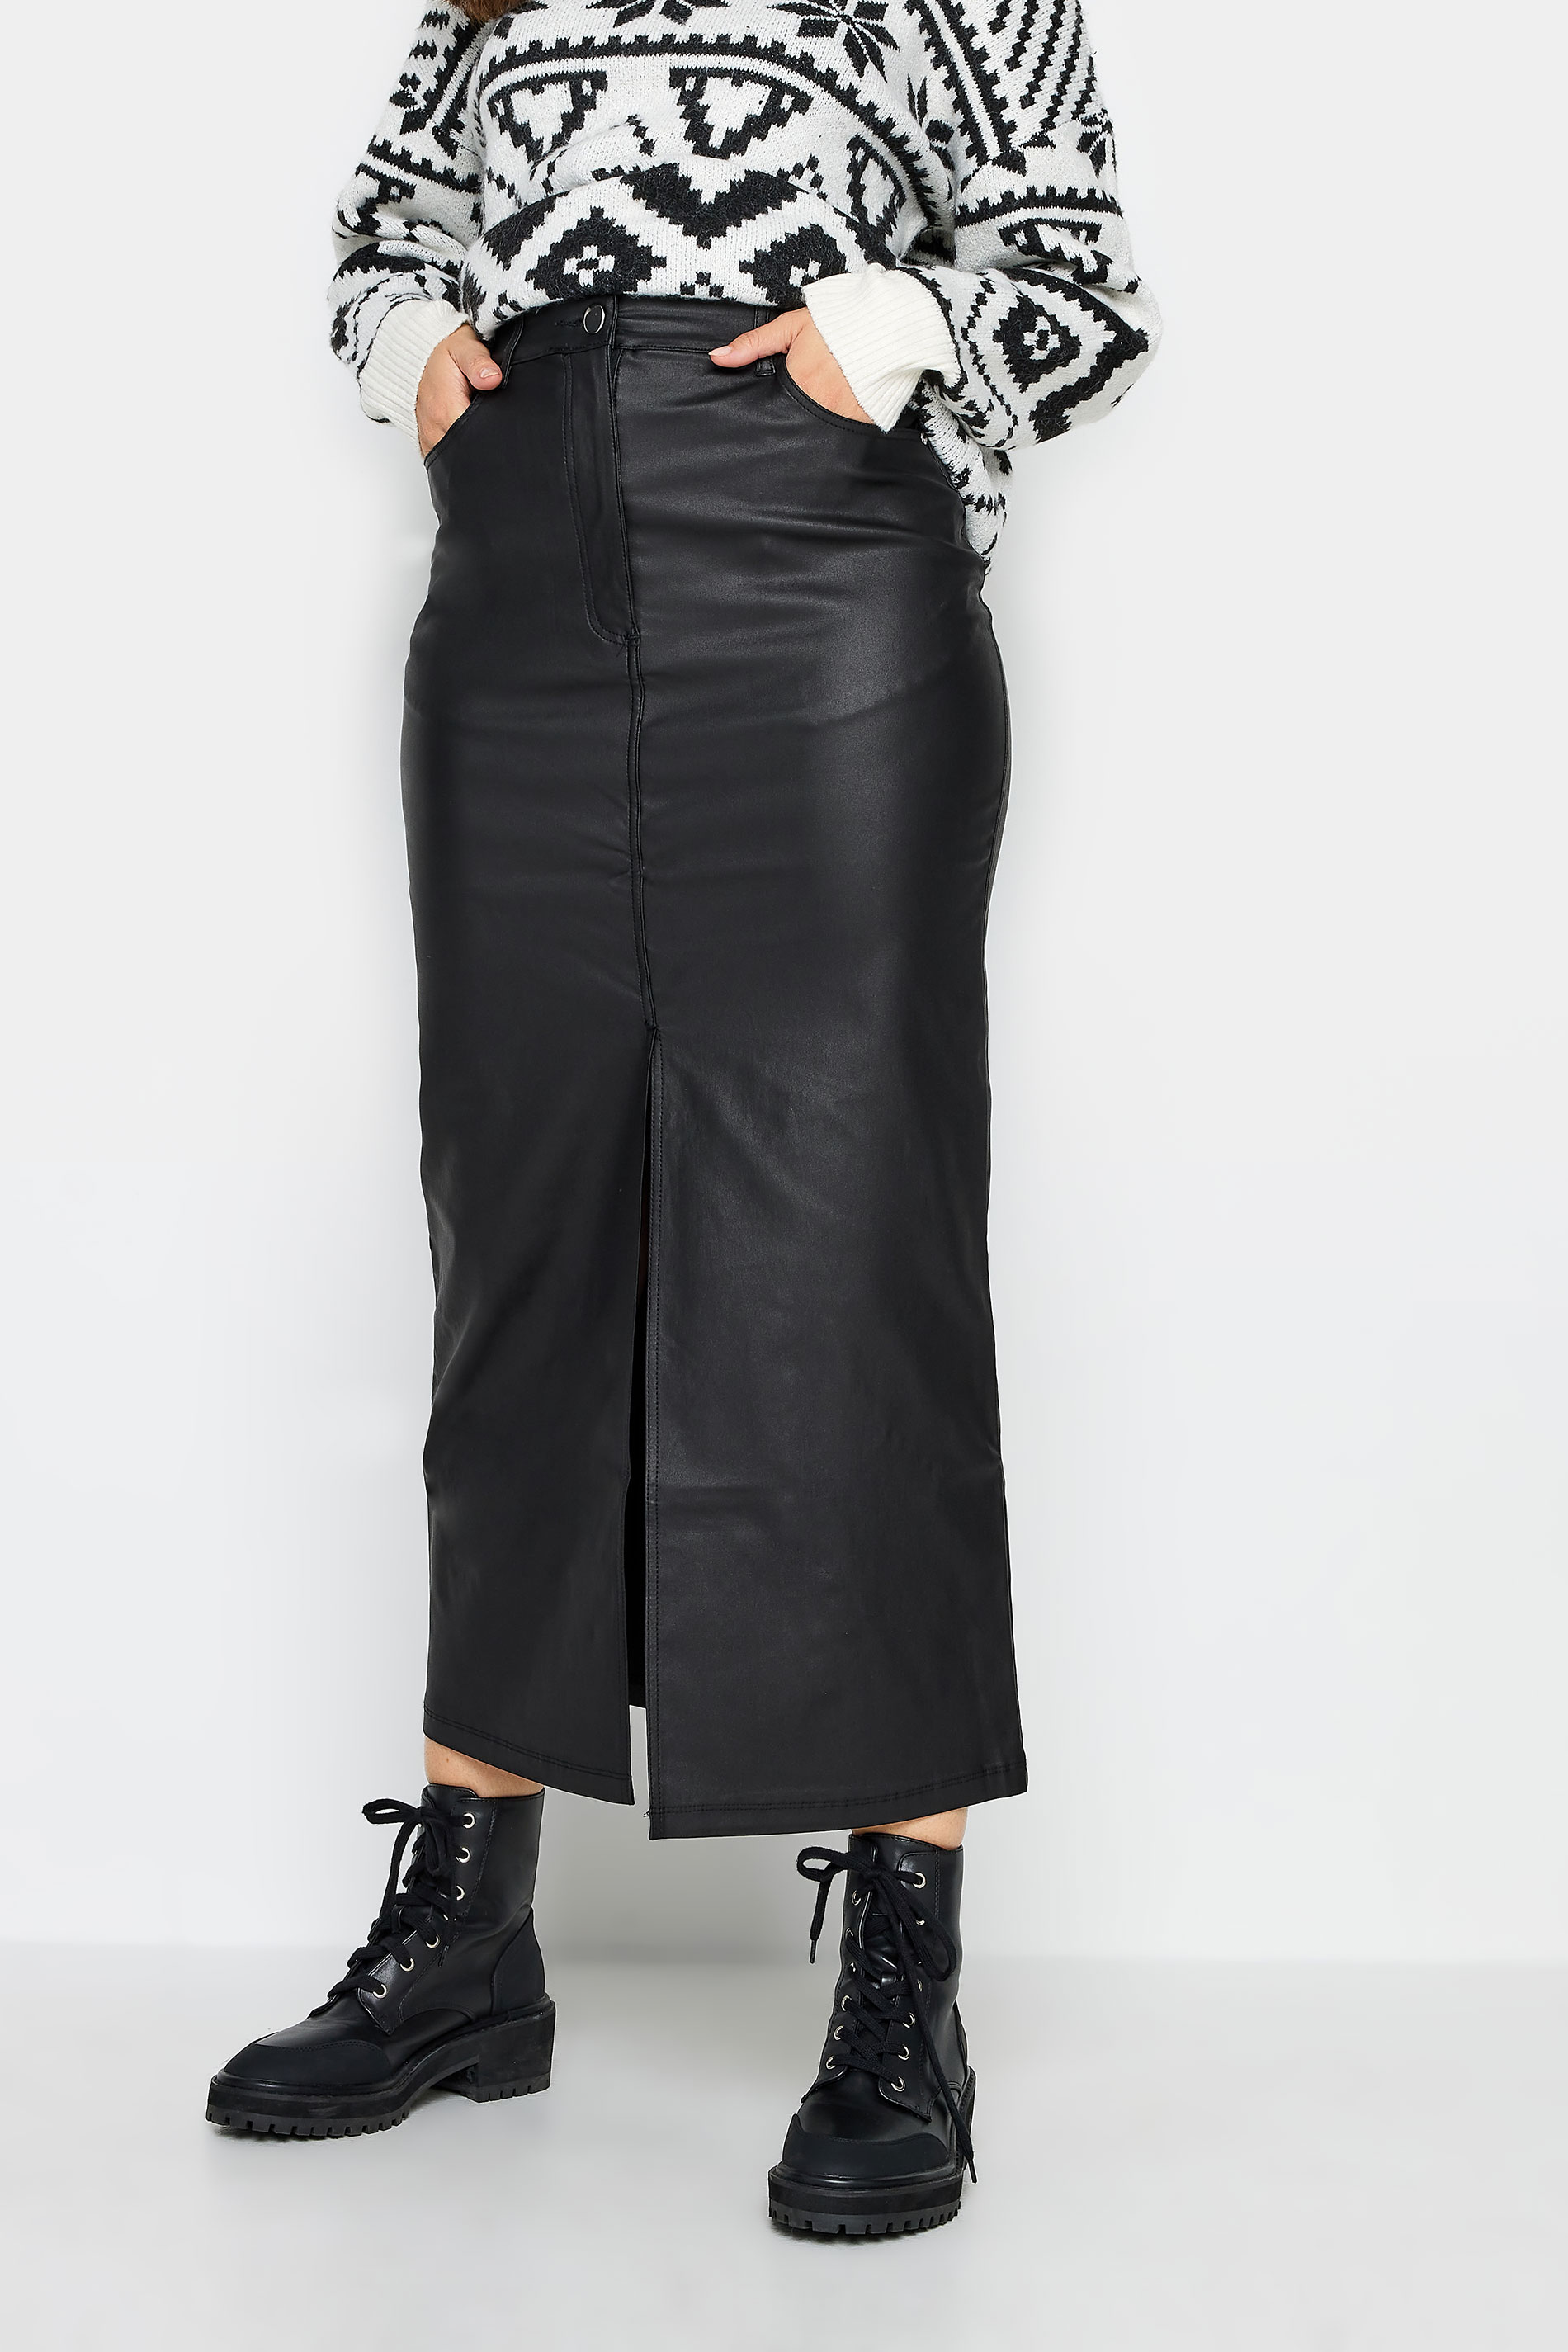 LTS Tall Black Coated Midi Skirt | Long Tall Sally  2